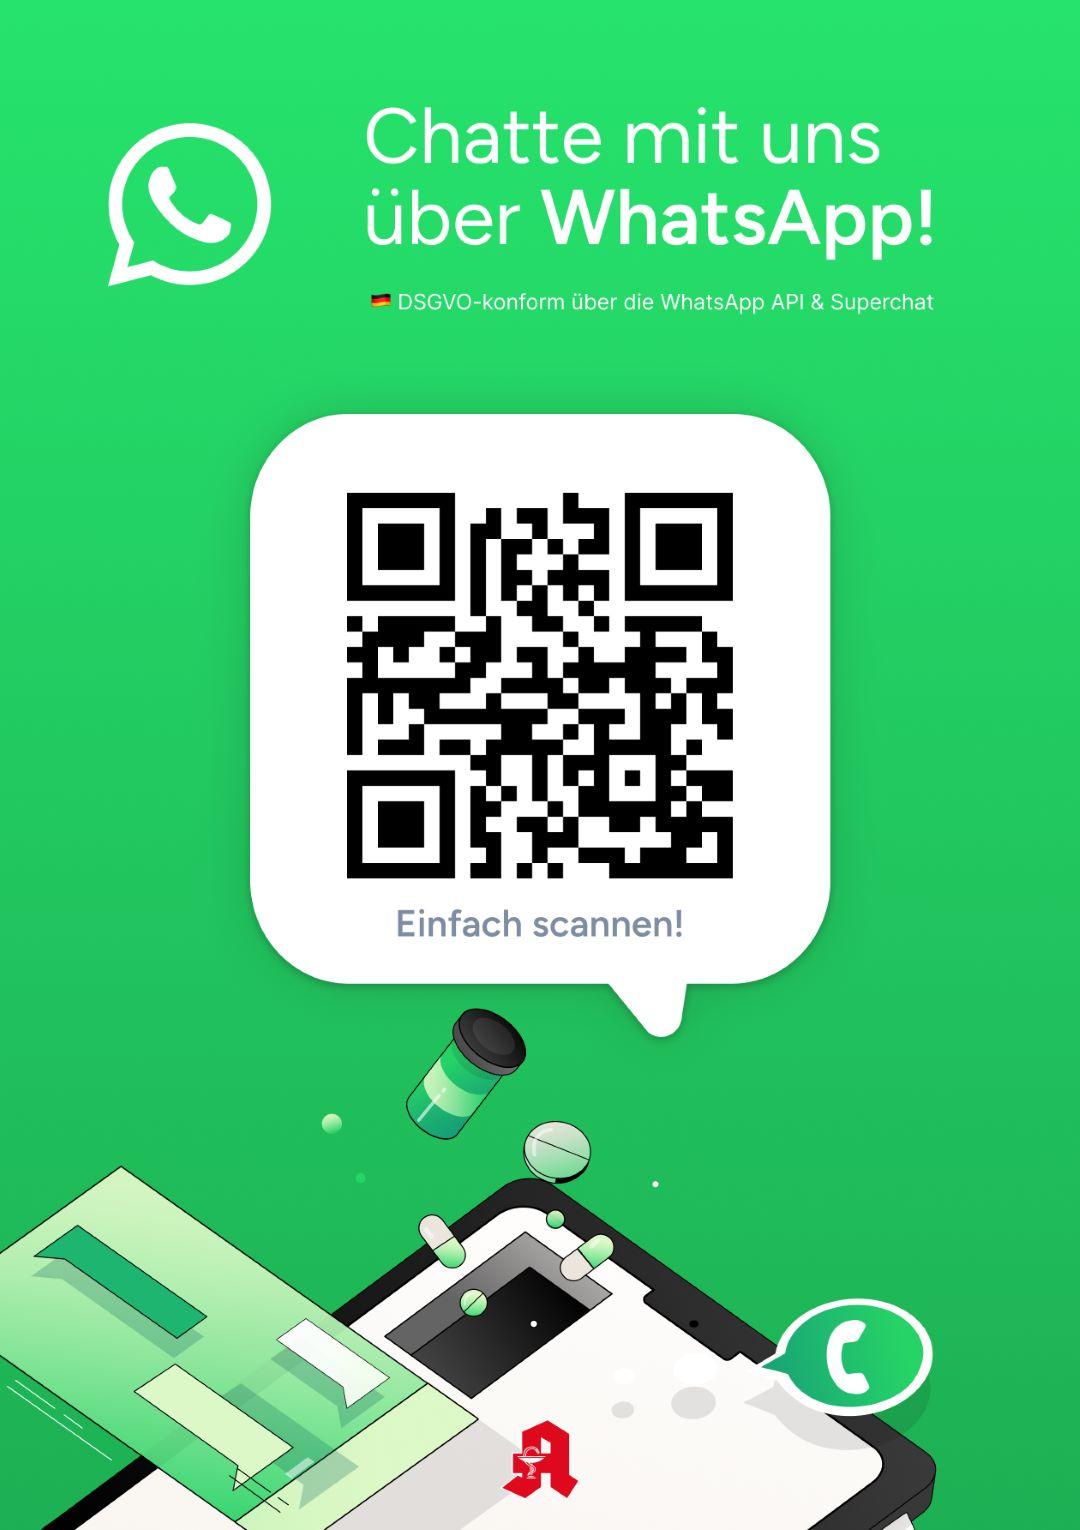 Chatte mit uns per WhatsApp